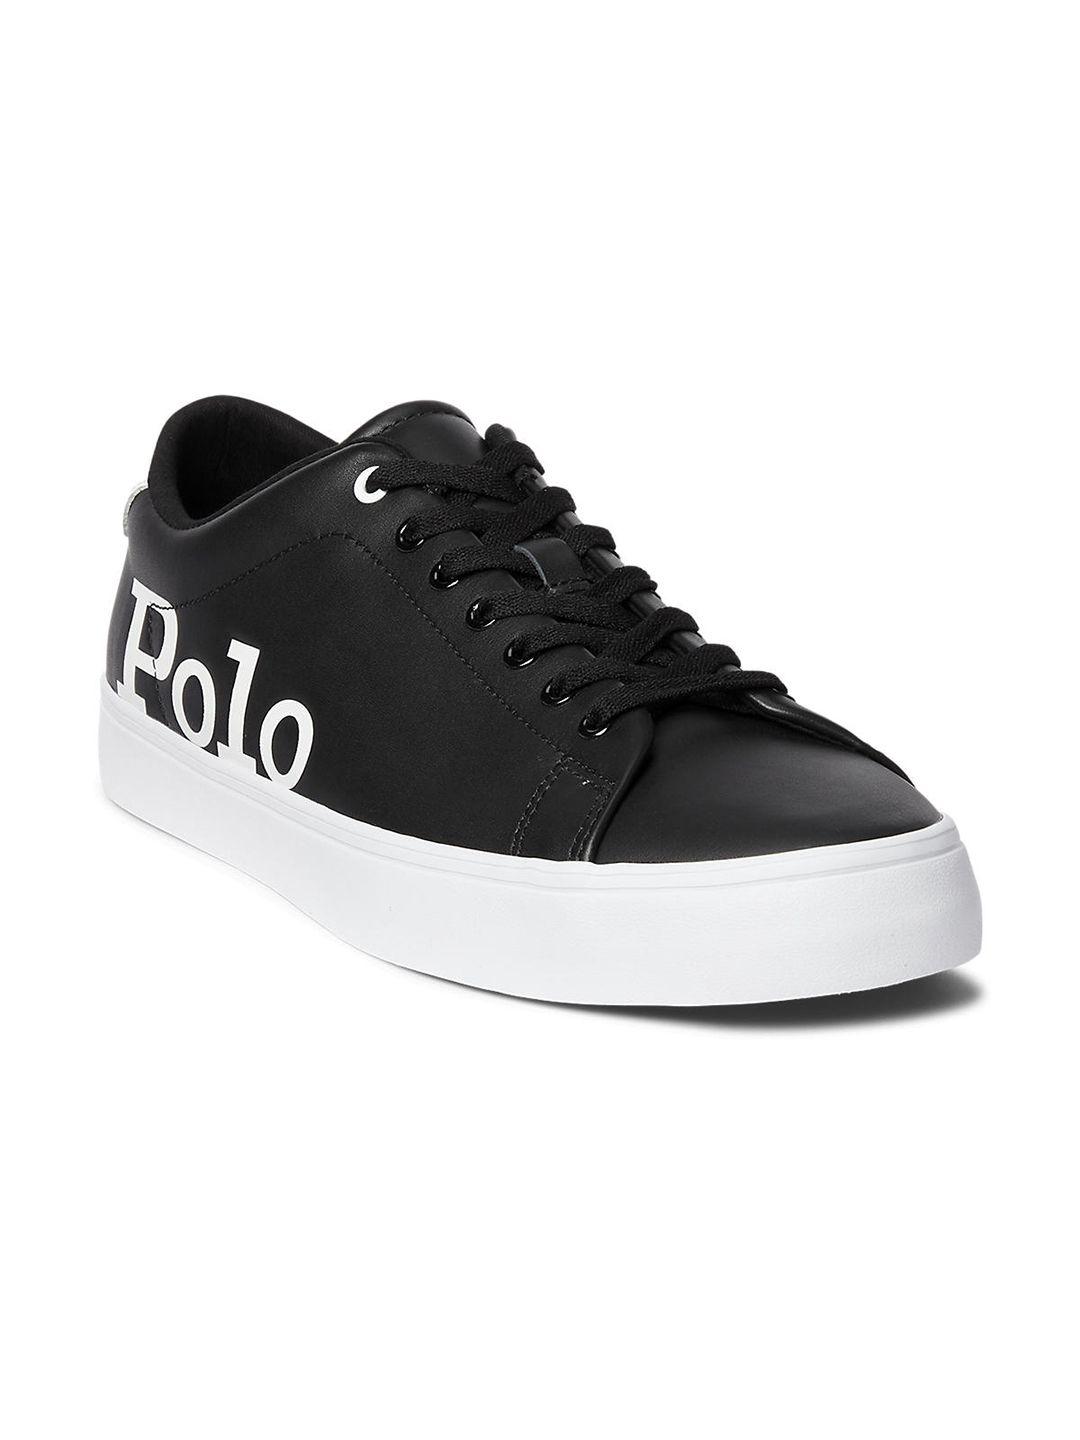 polo ralph lauren men black printed leather sneakers